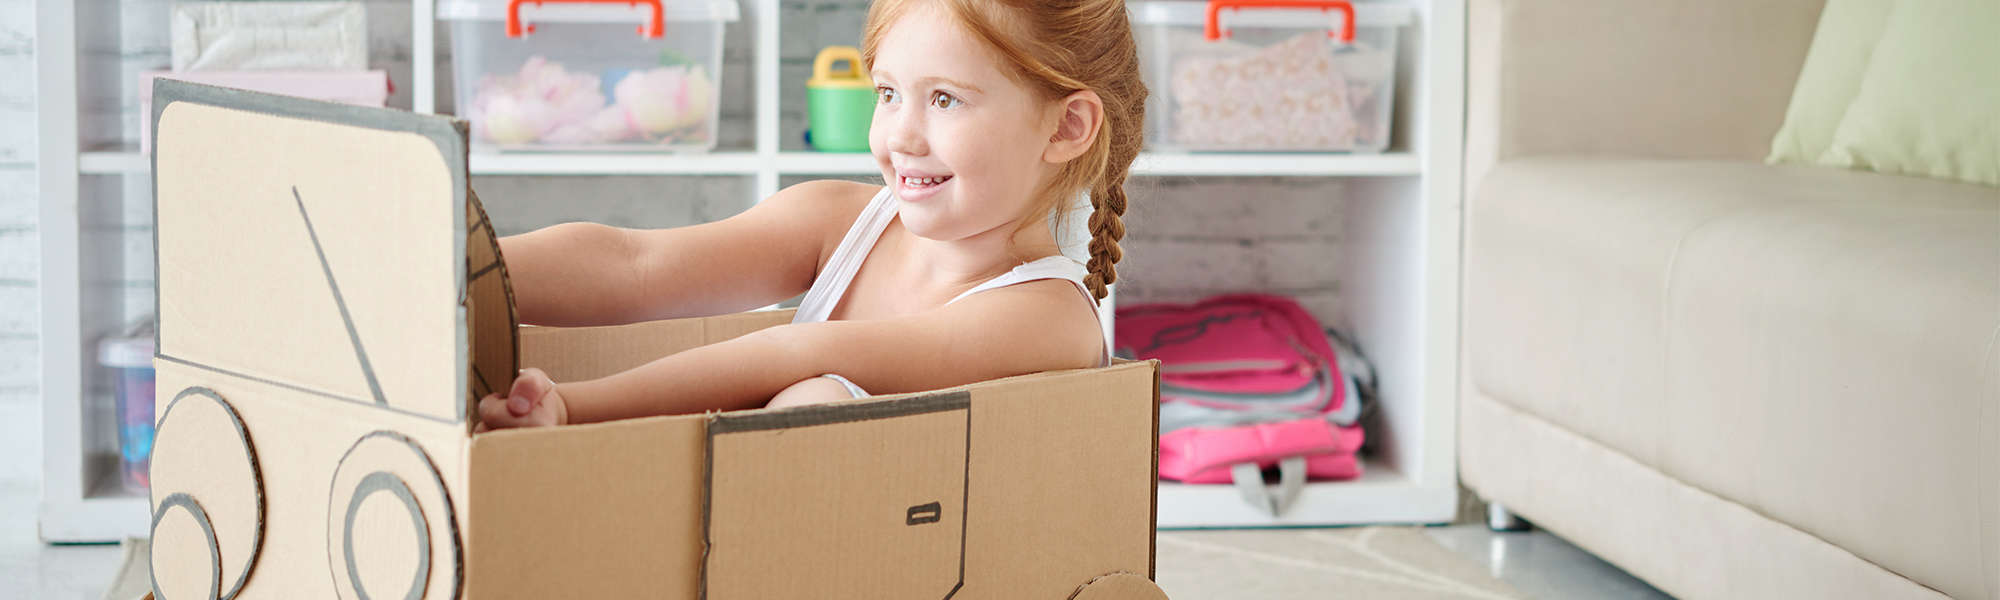 Cardboard Box Car – Creative Projects the Kids will Love